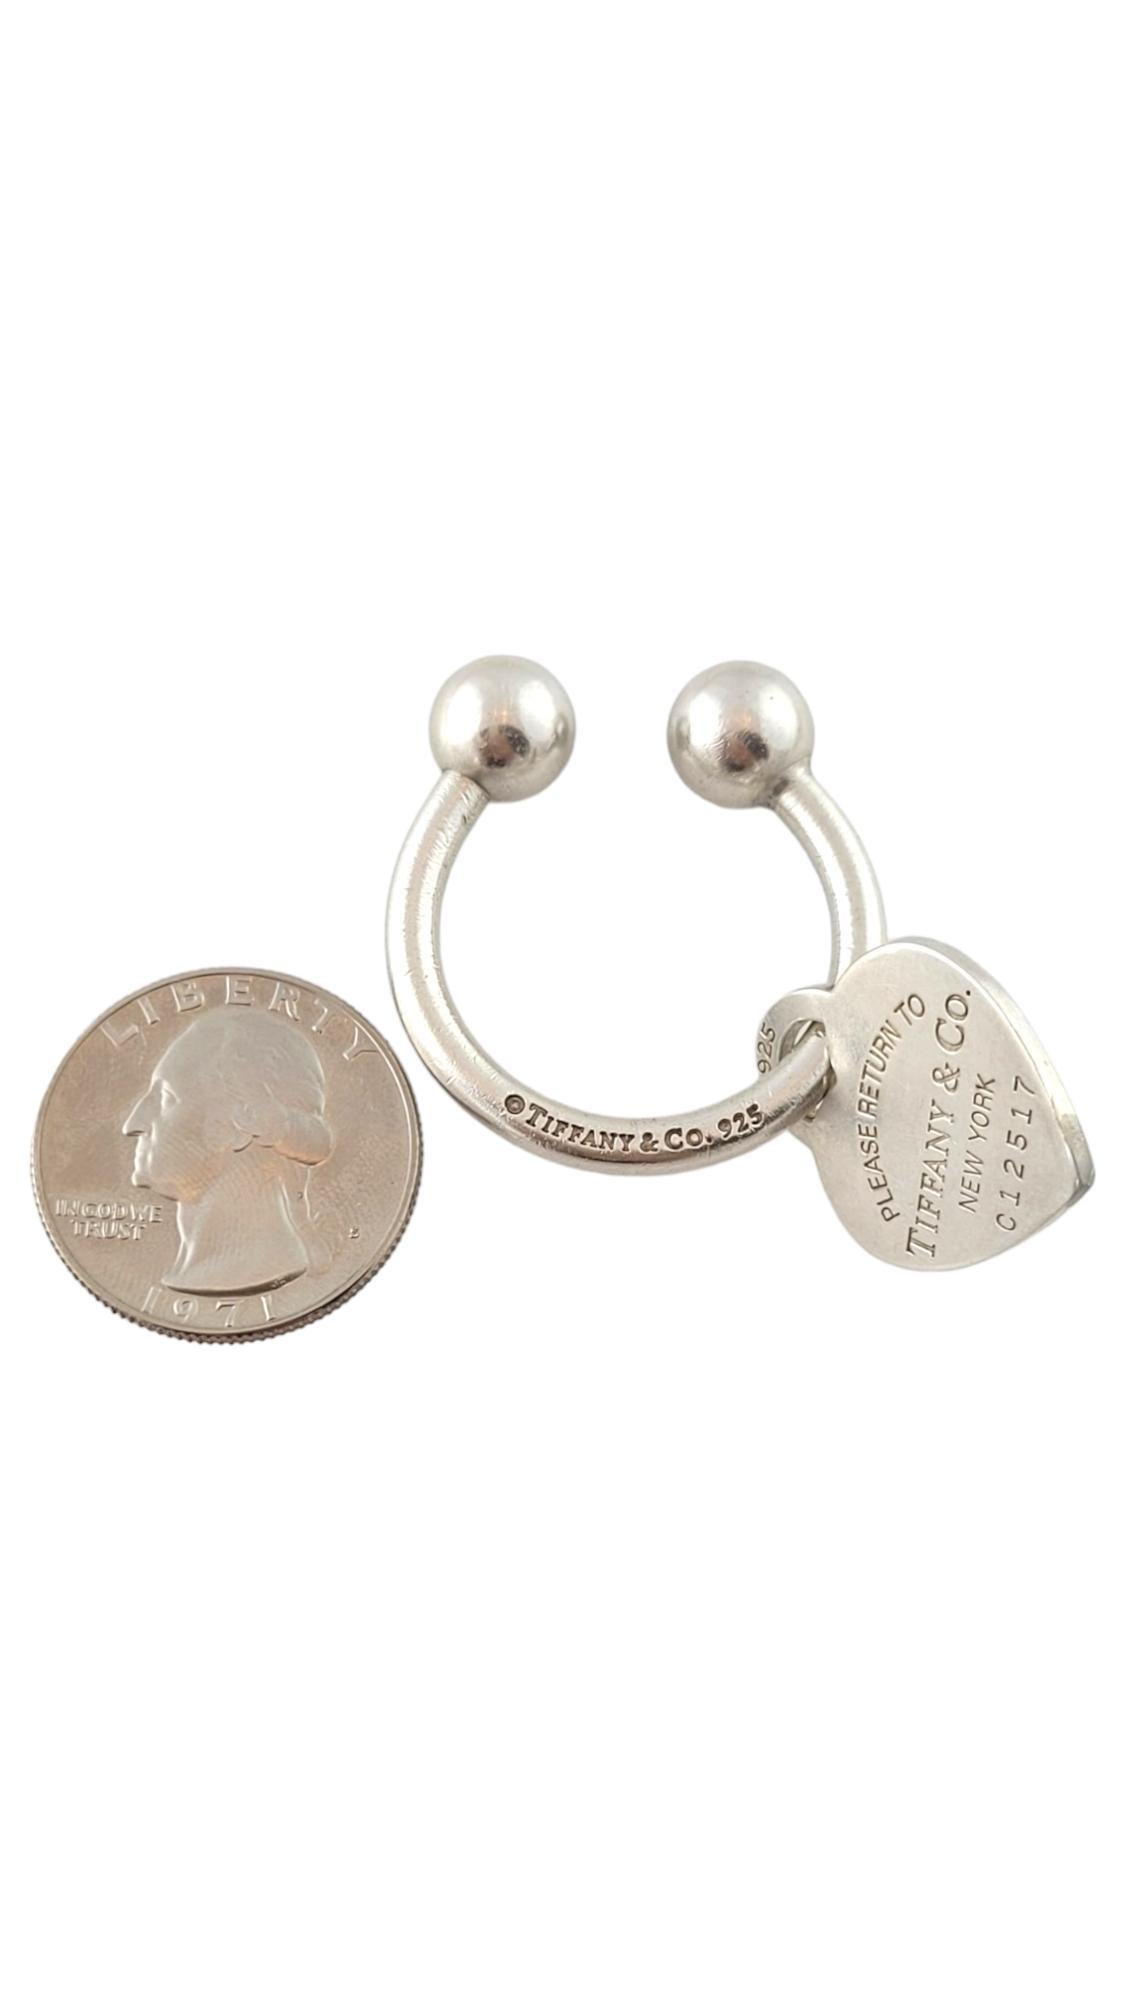 Tiffany & Co Sterling Silver Return to Tiffany Heart Tag Key Ring #17413 2